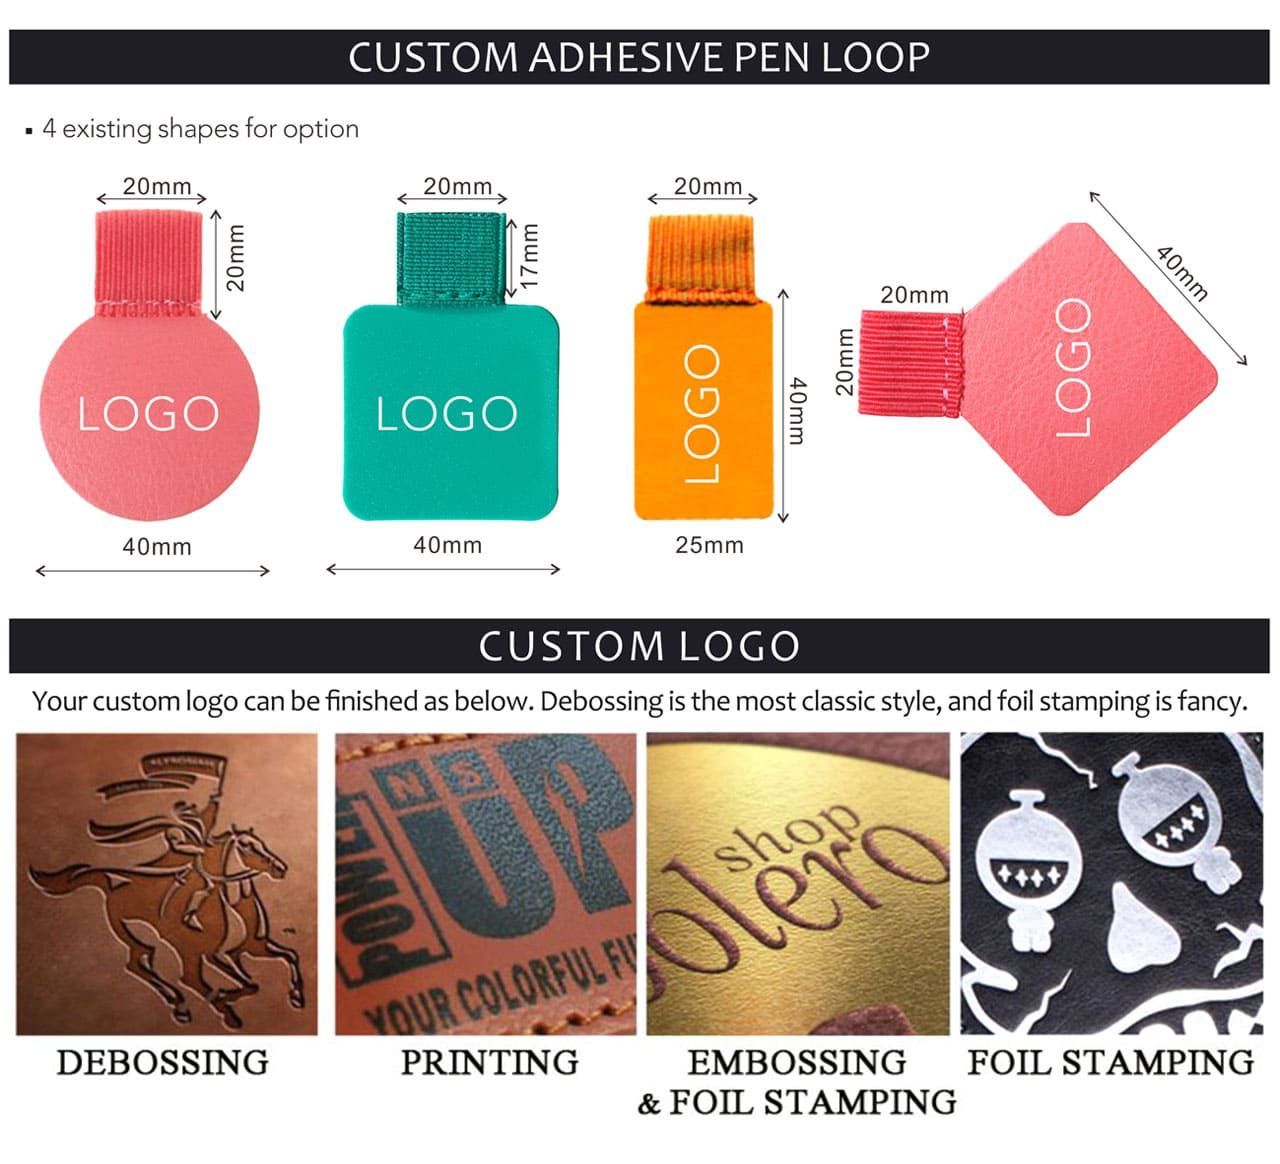 Customized Adhesive Pen Loop